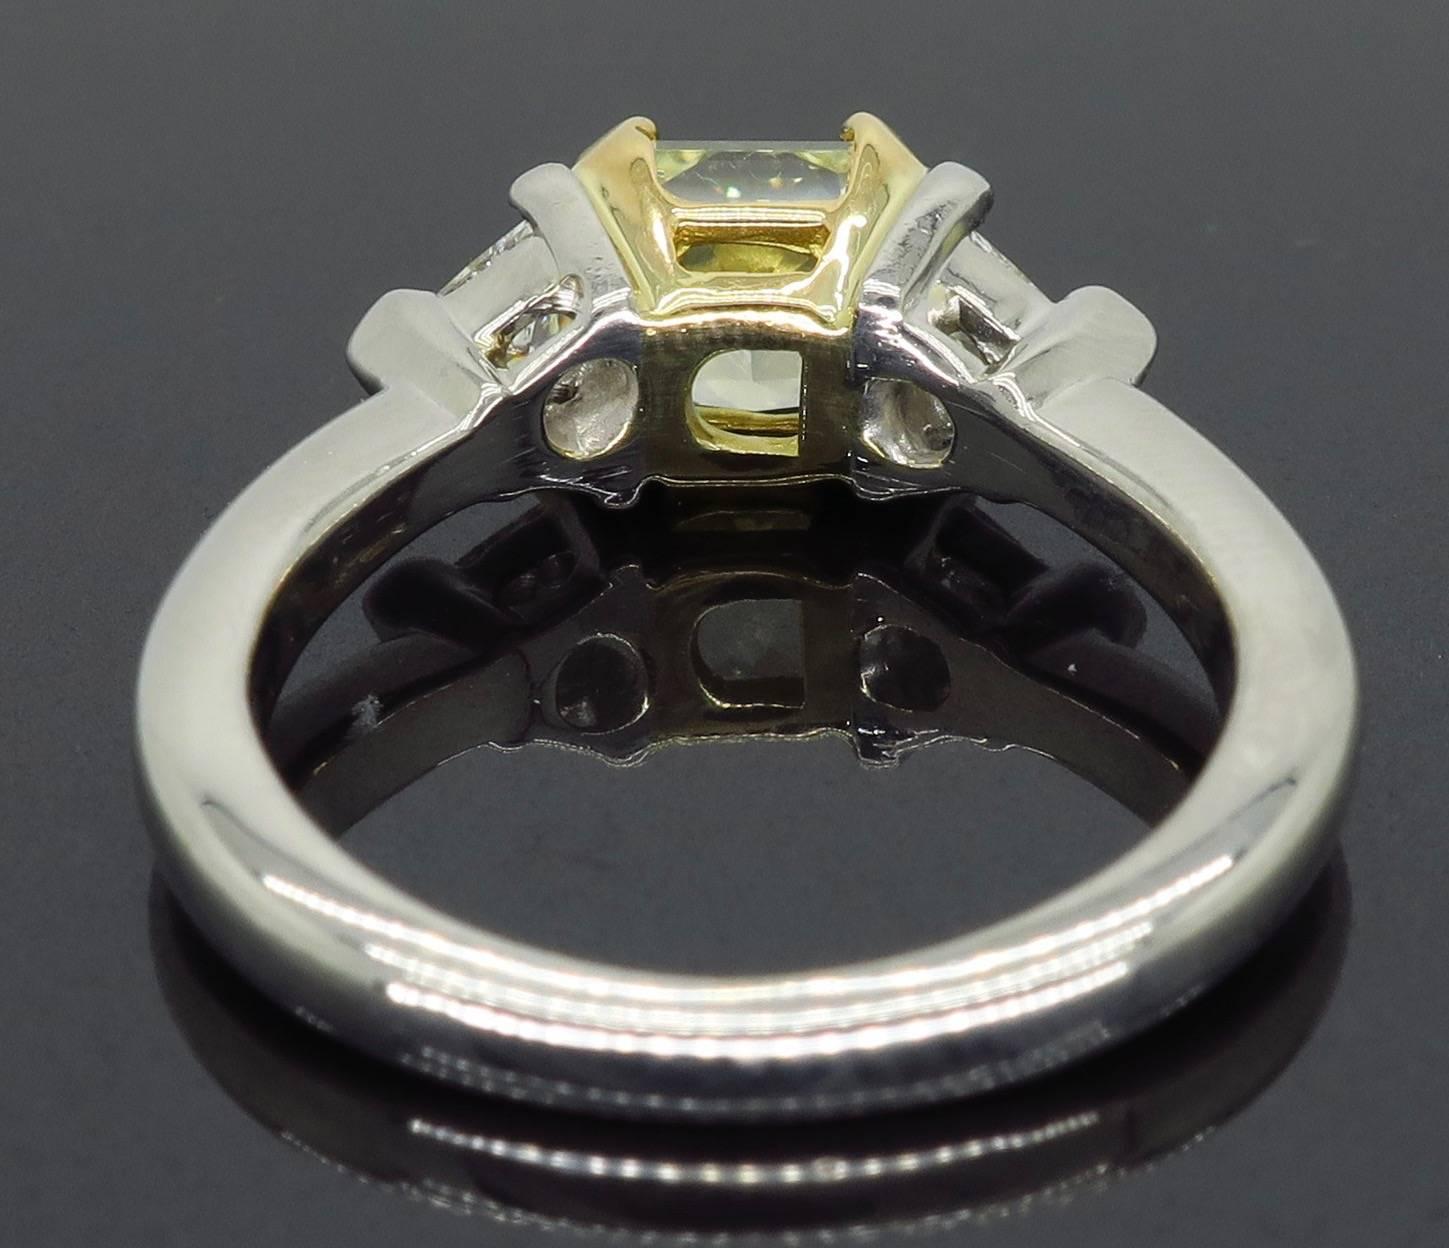 Certified Fancy Yellow Three-Stone Diamond Ring in Platinum and 18 Karat Gold 4